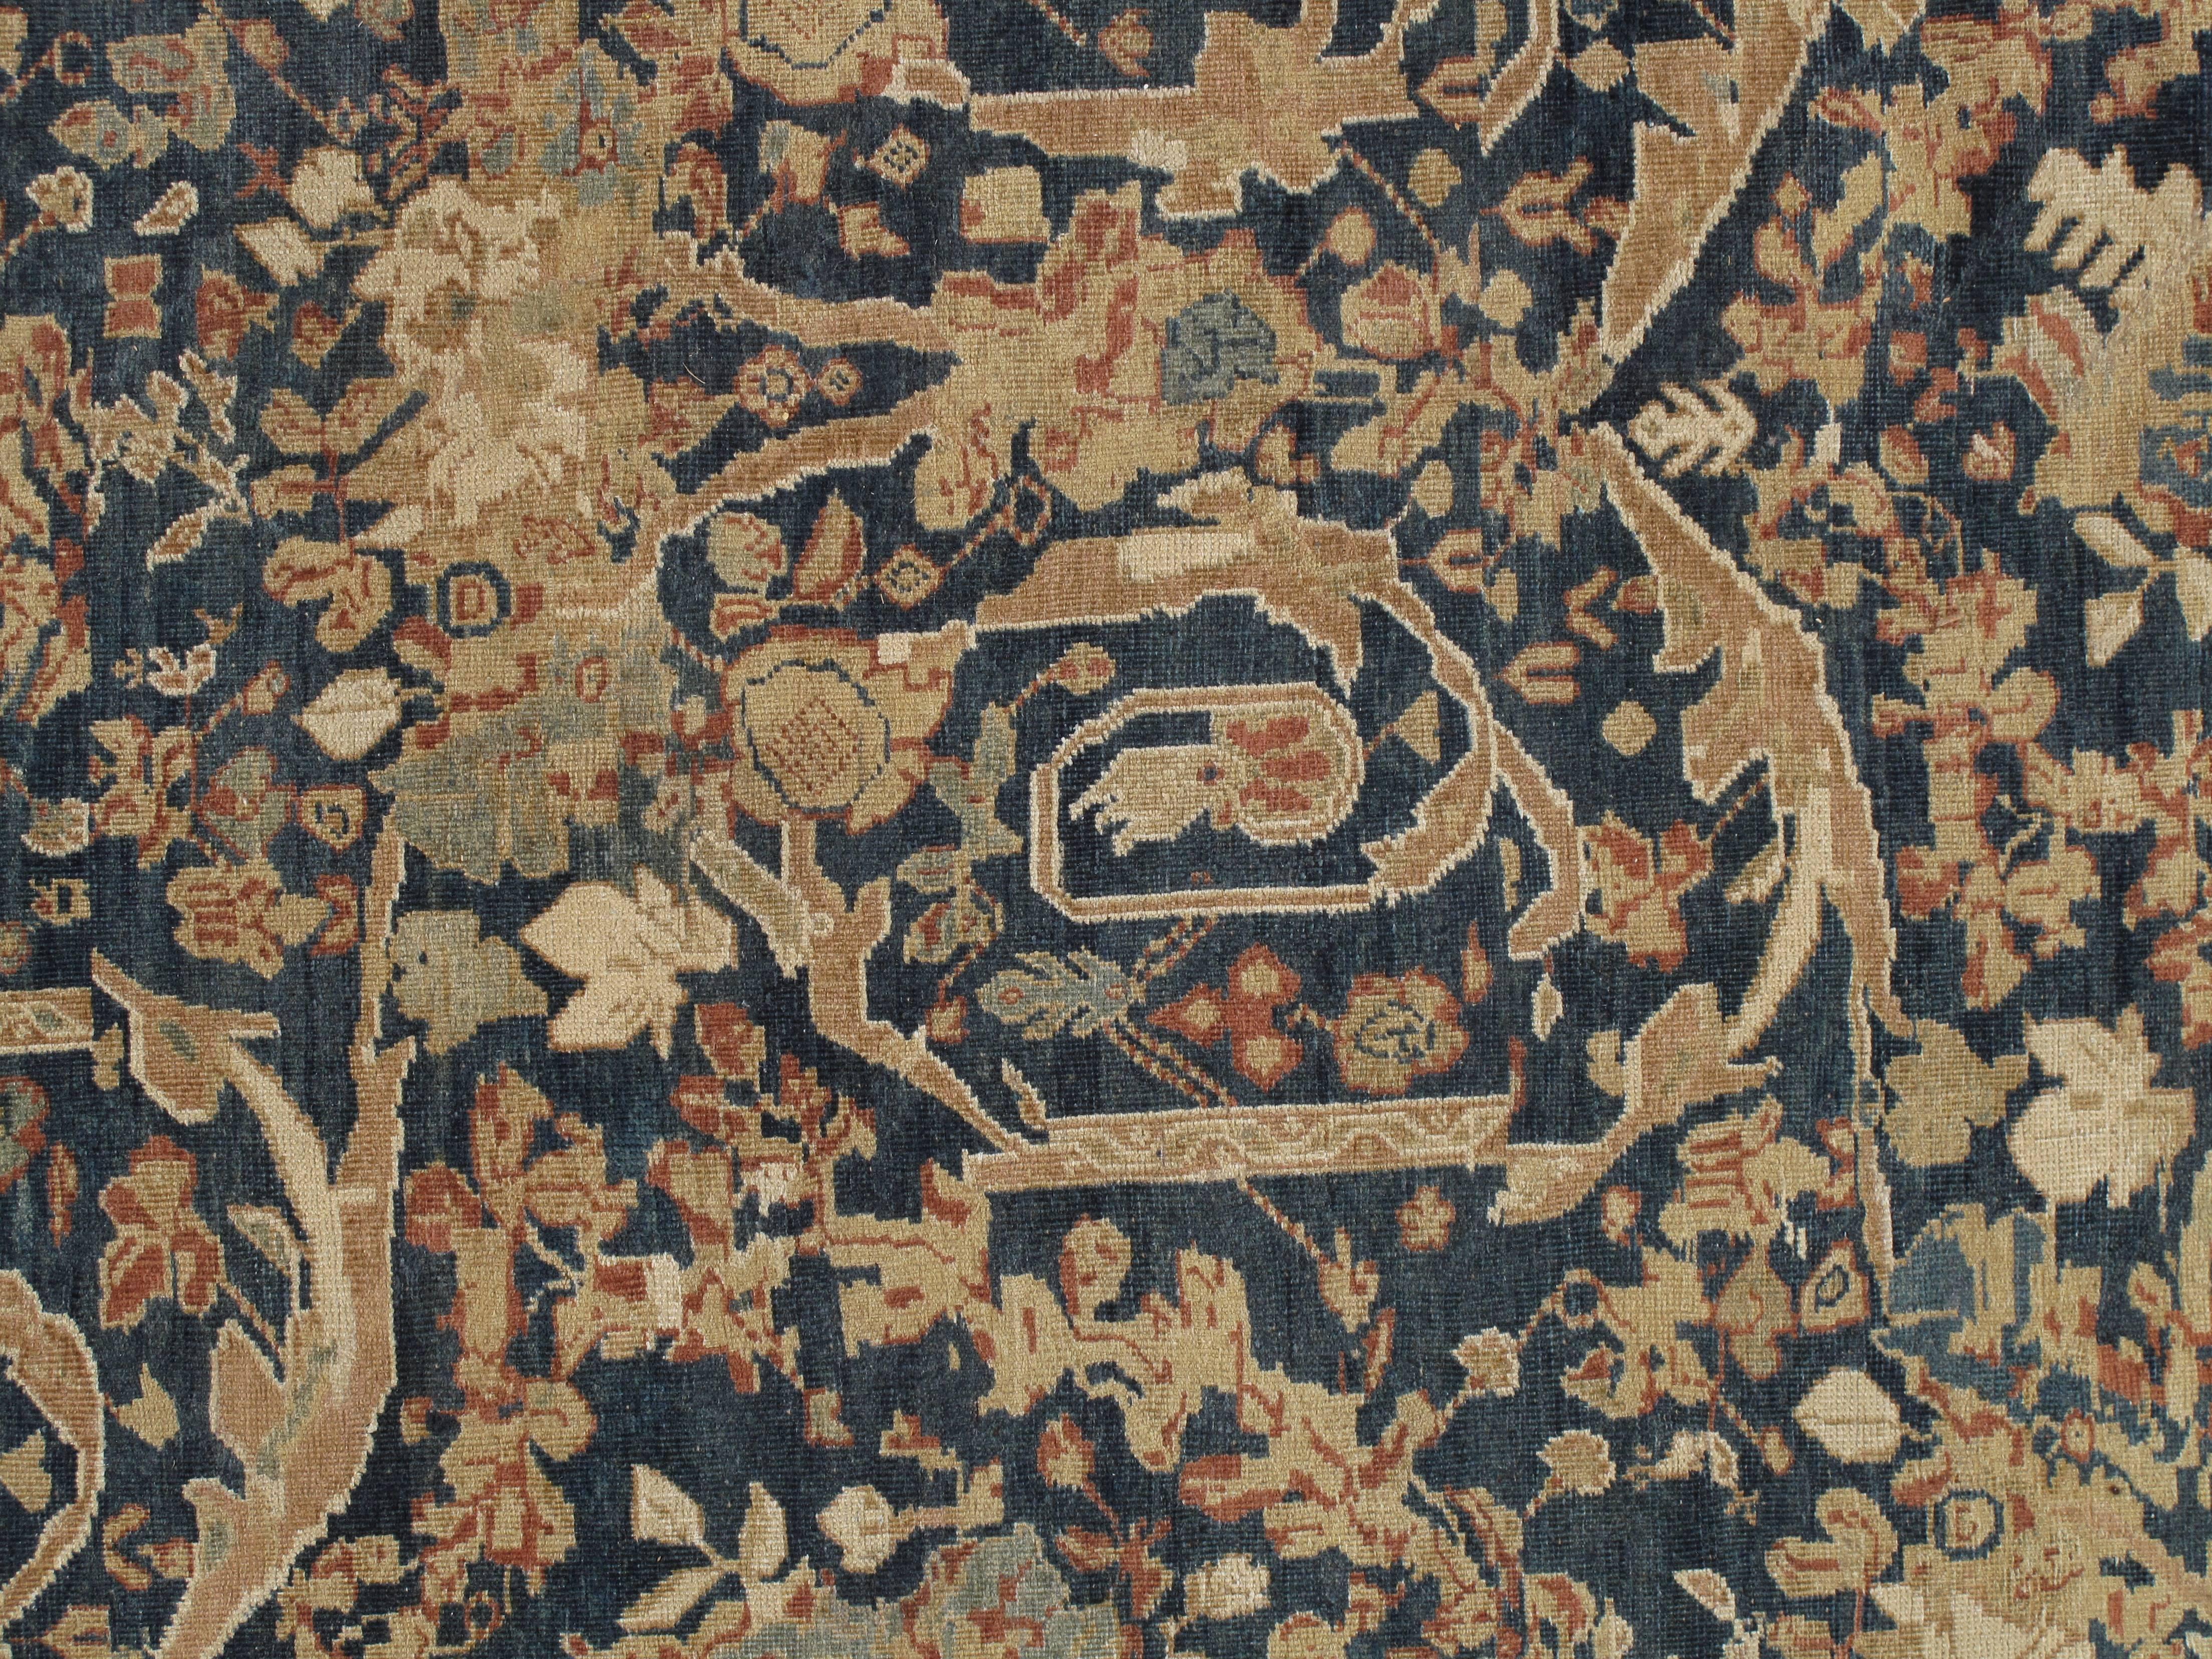 Antique Sultanabad Carpet, Persian Handmade Wool Rug, Soft Navy, Light Blue Ivor 1